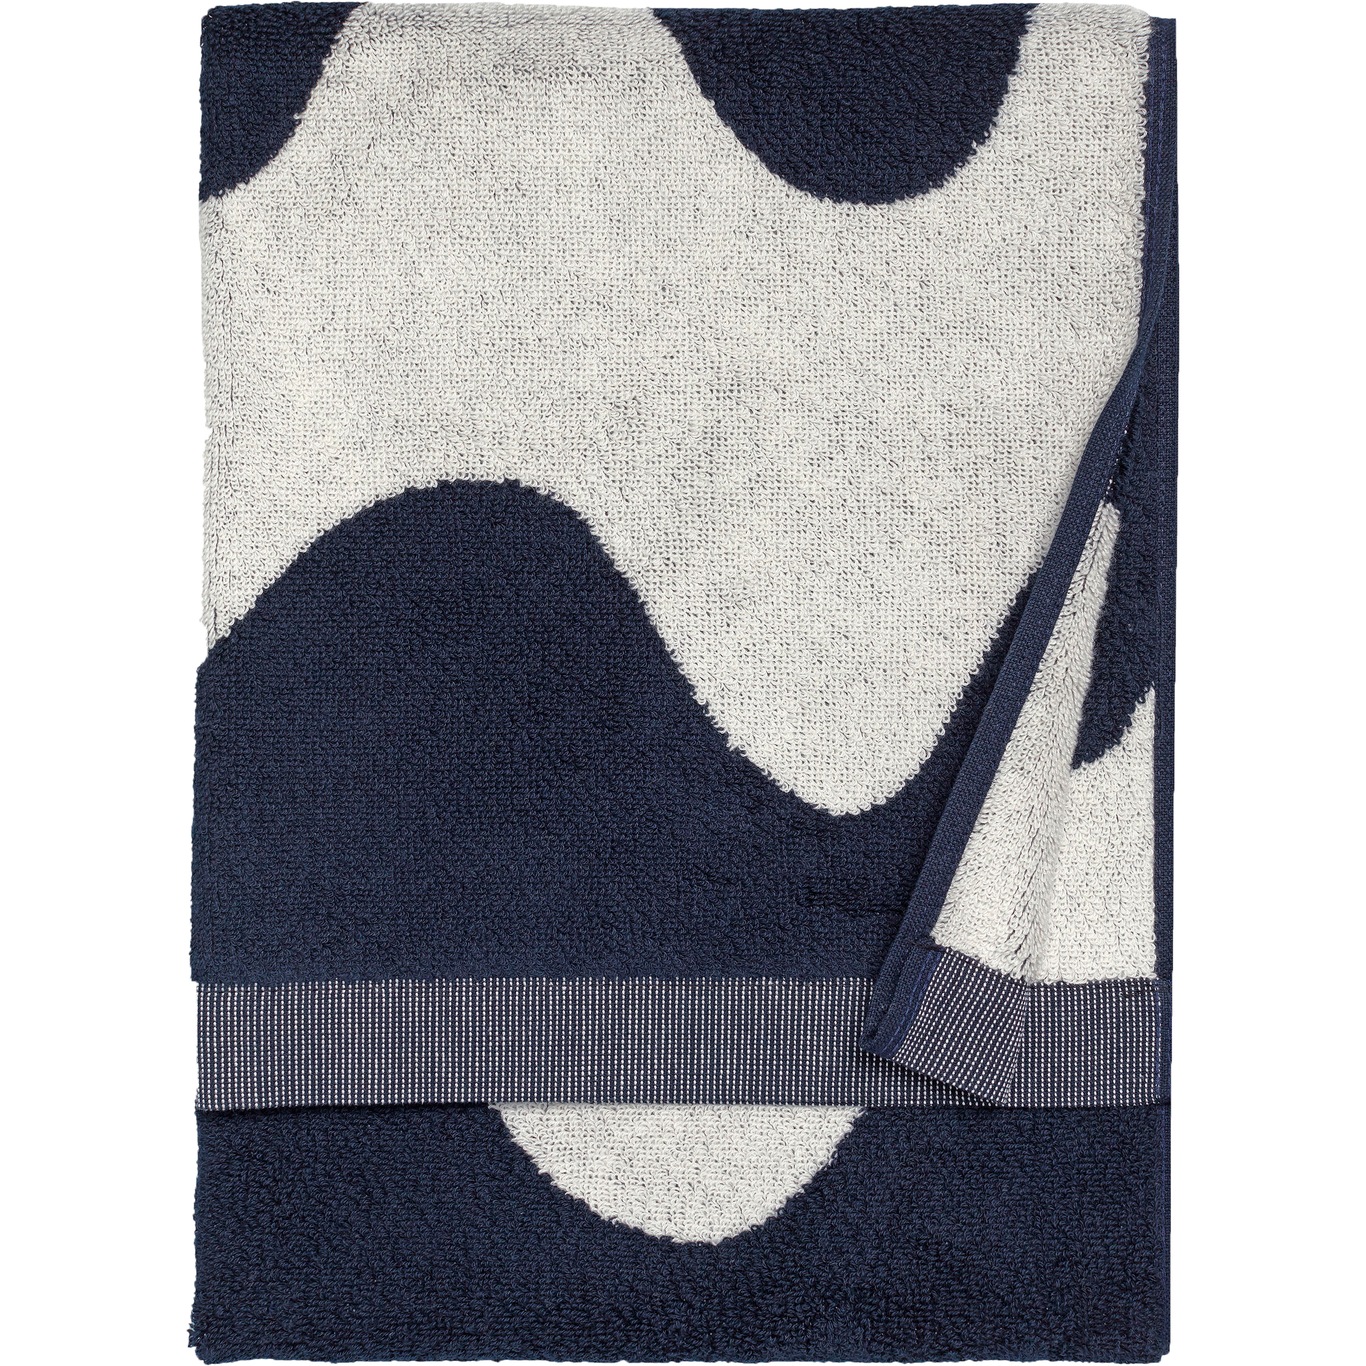 Lokki Håndklæde Mørkeblåt / Offwhite, 50x70 cm